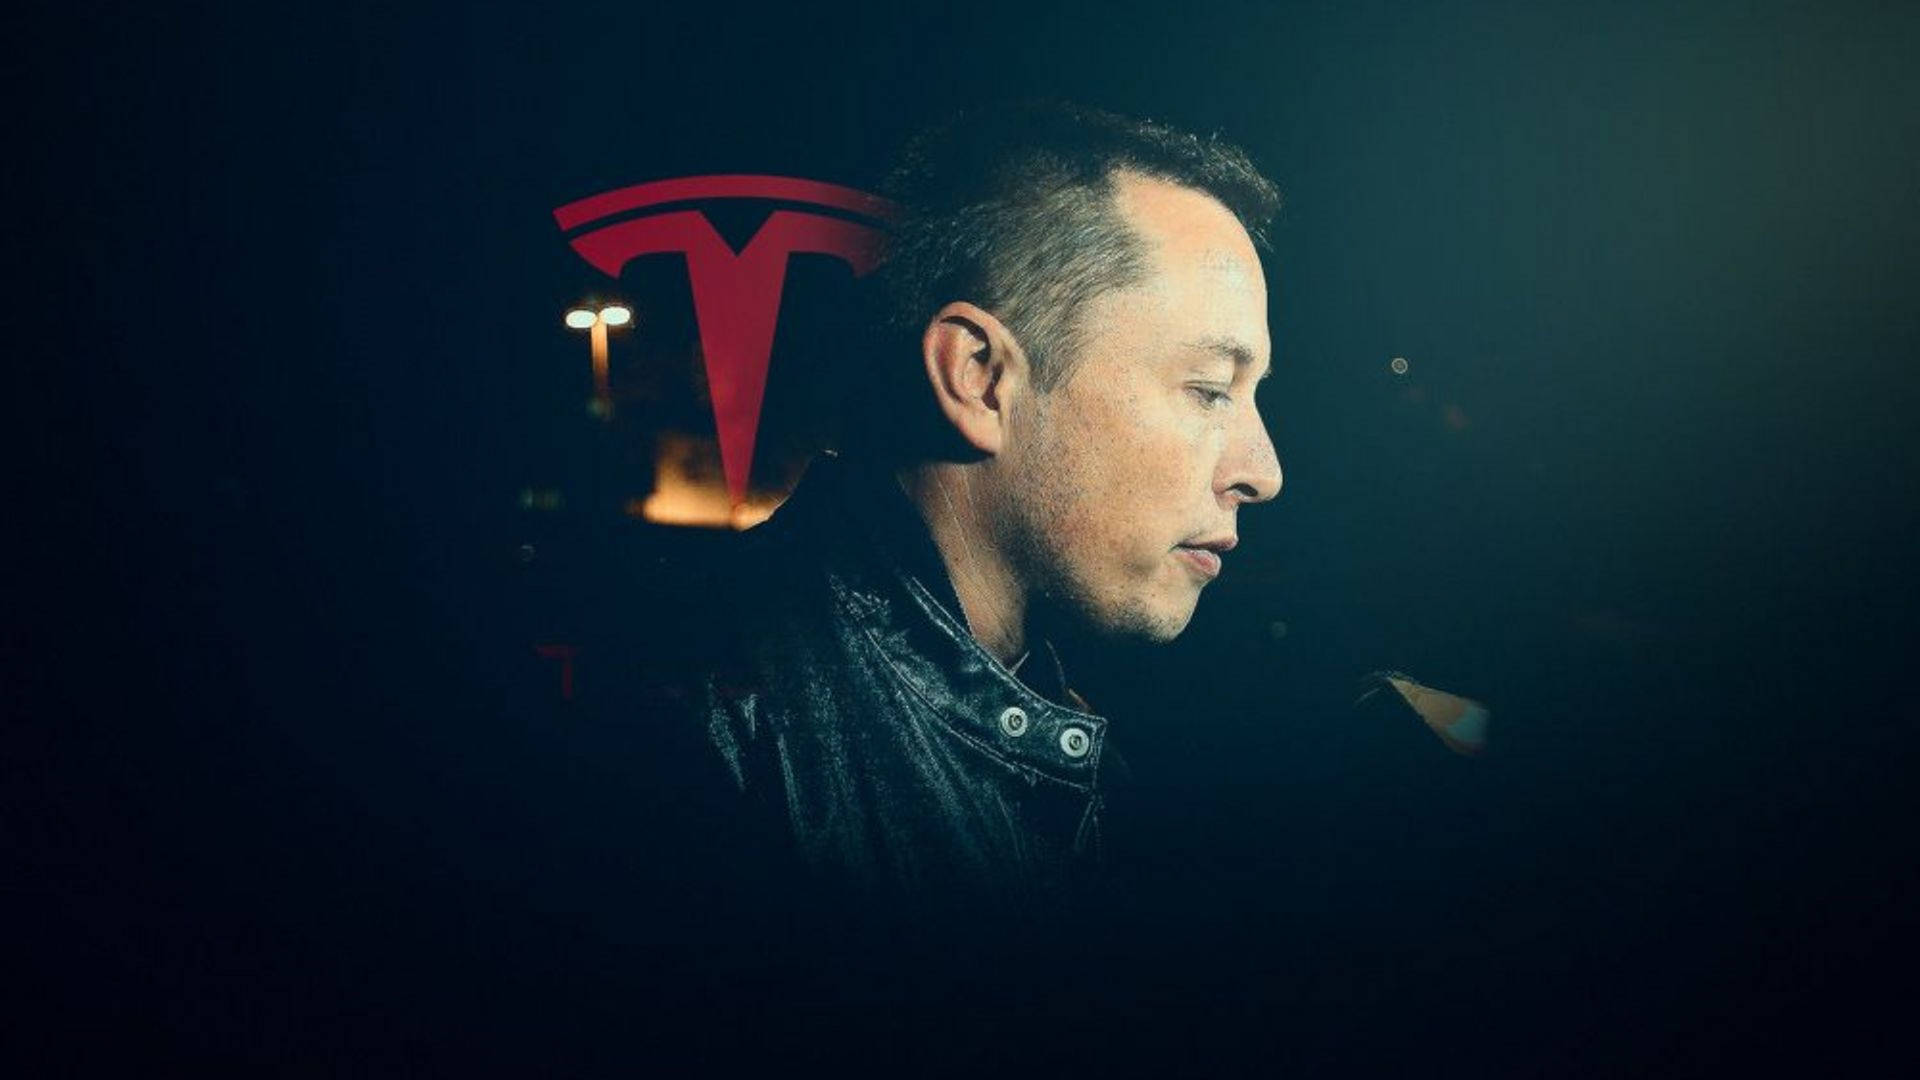 Elon Musk Tesla Dark Portrait Wallpaper